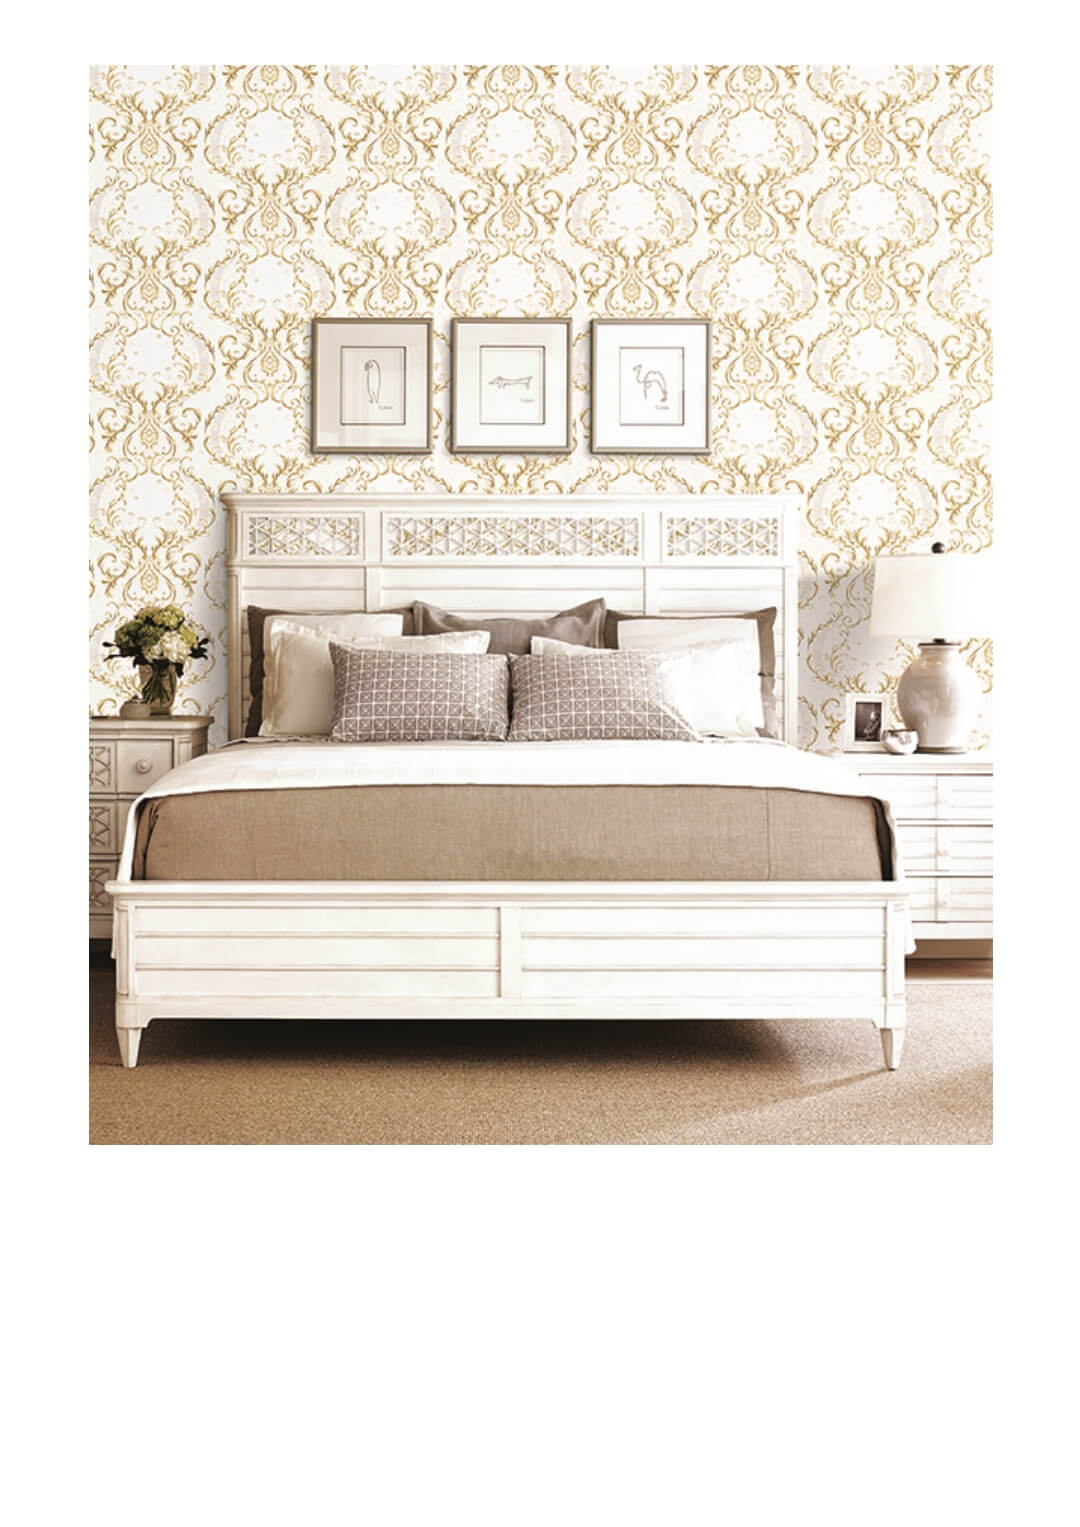 Romantic Floral Wallpaper Decoration For Bedroom (8)